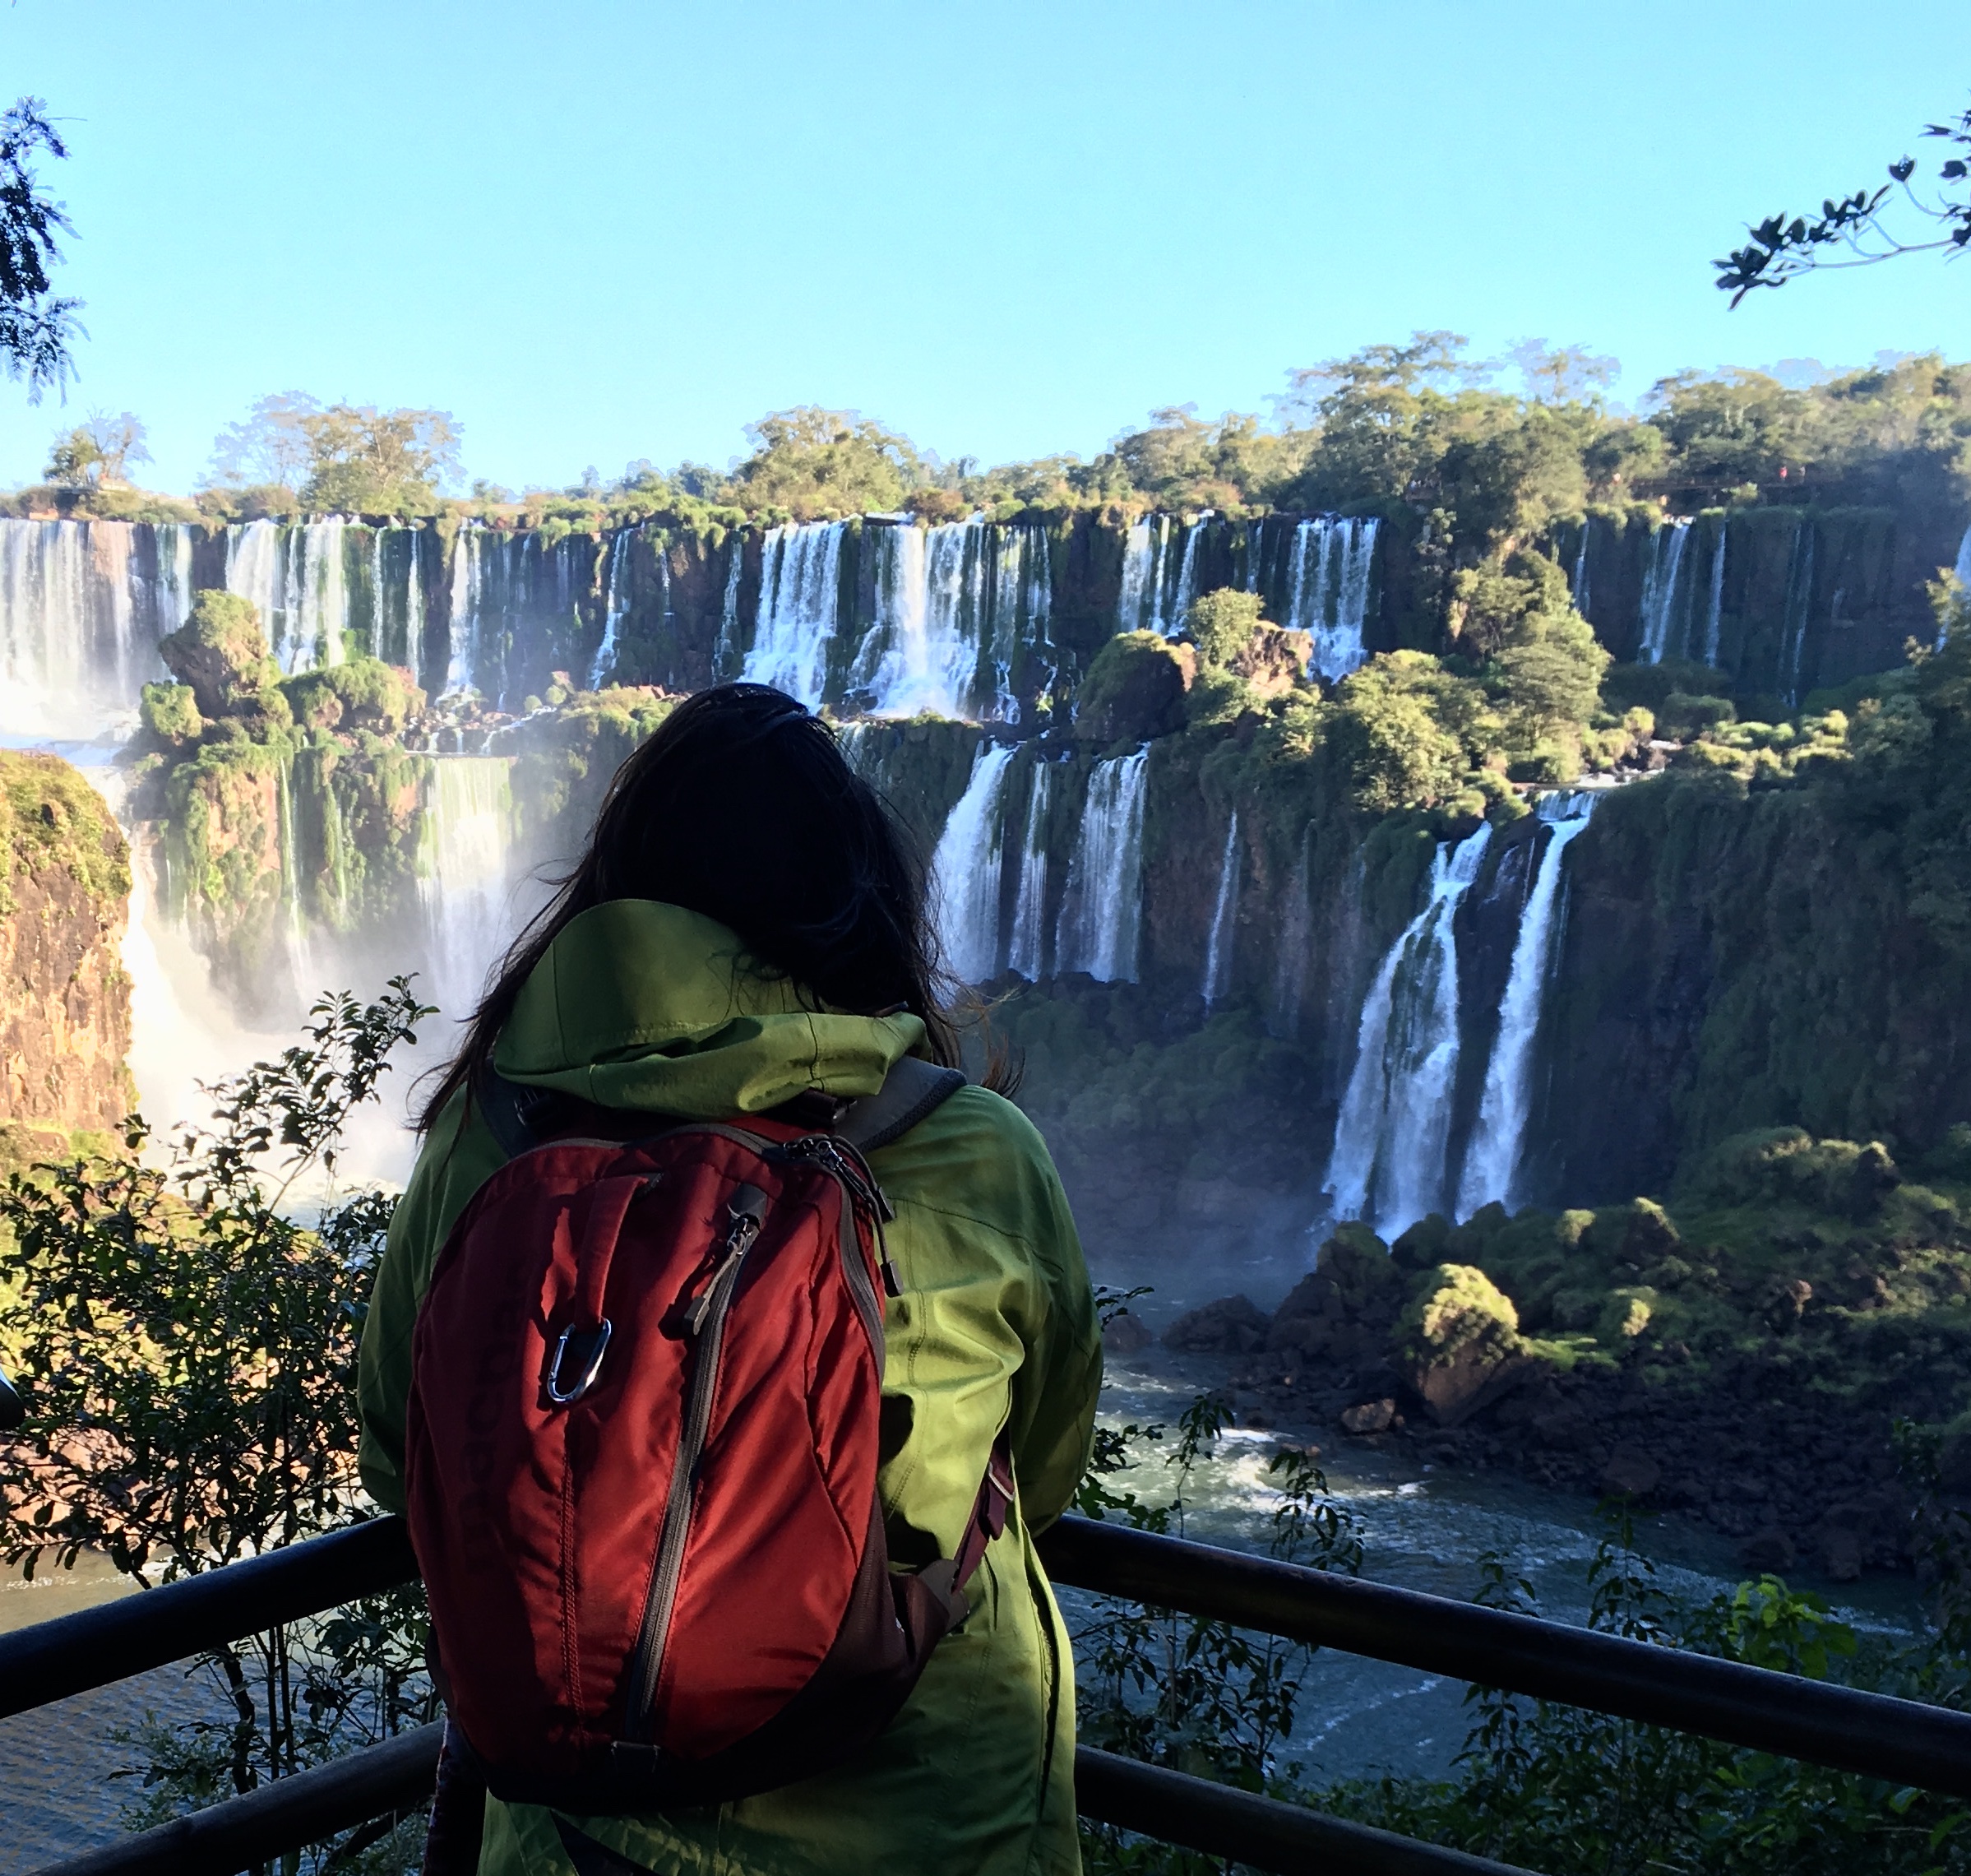 Taking in the majesty of the Iguazu Falls